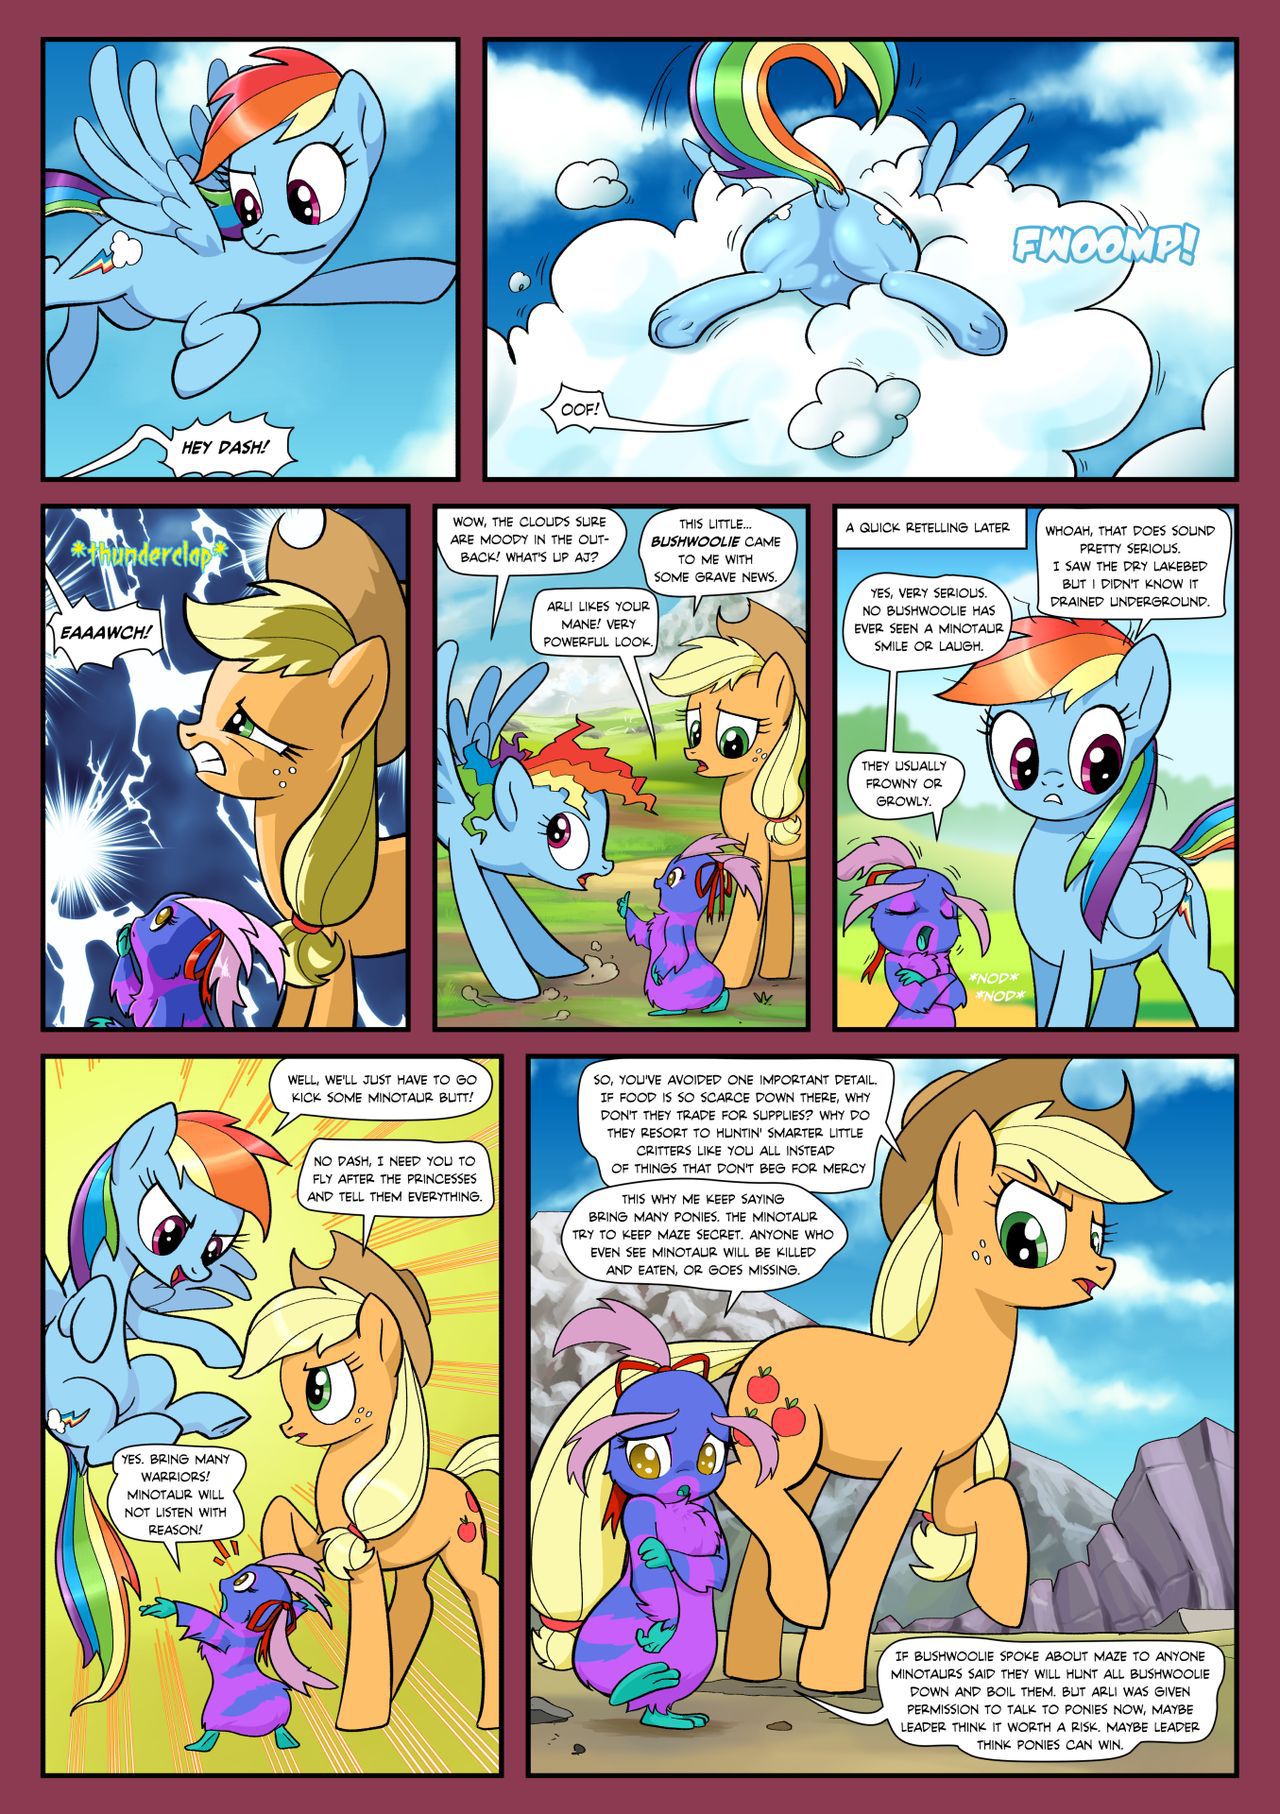 [Pencils] Anon's Pie Adventures (My Little Pony: Friendship is Magic) [In-Progress] 220